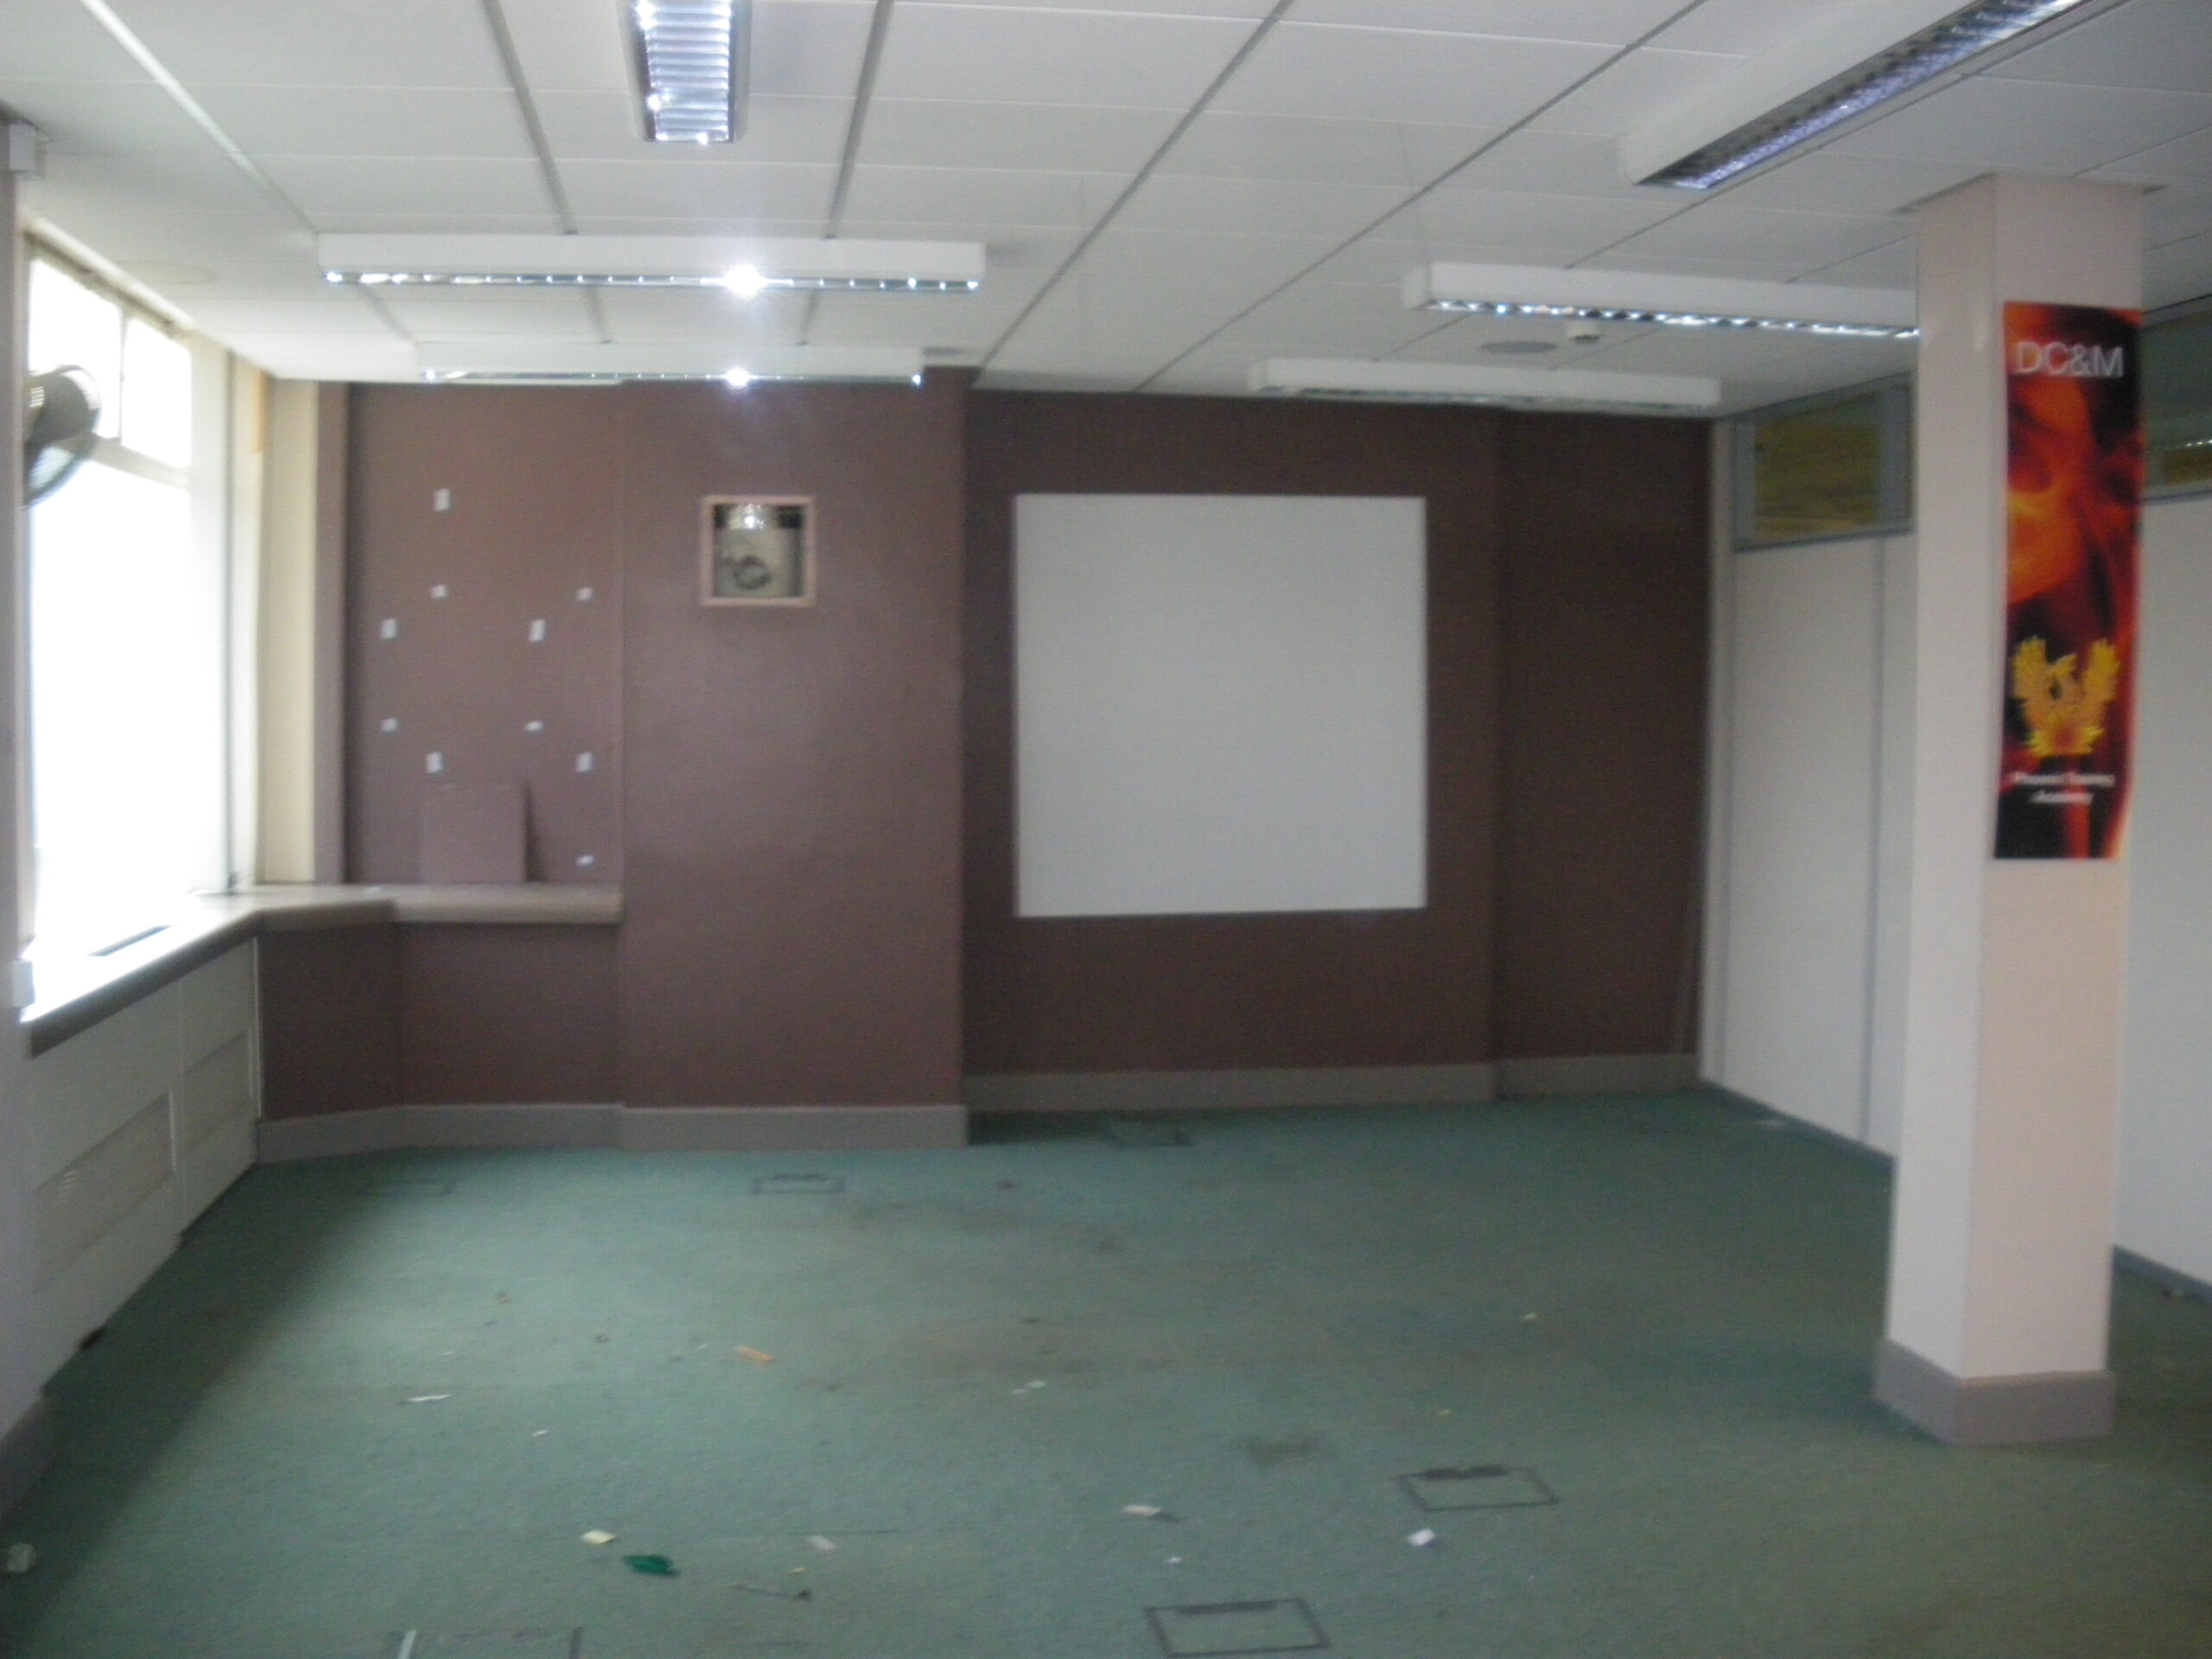 Office room, 11 Sep 2011